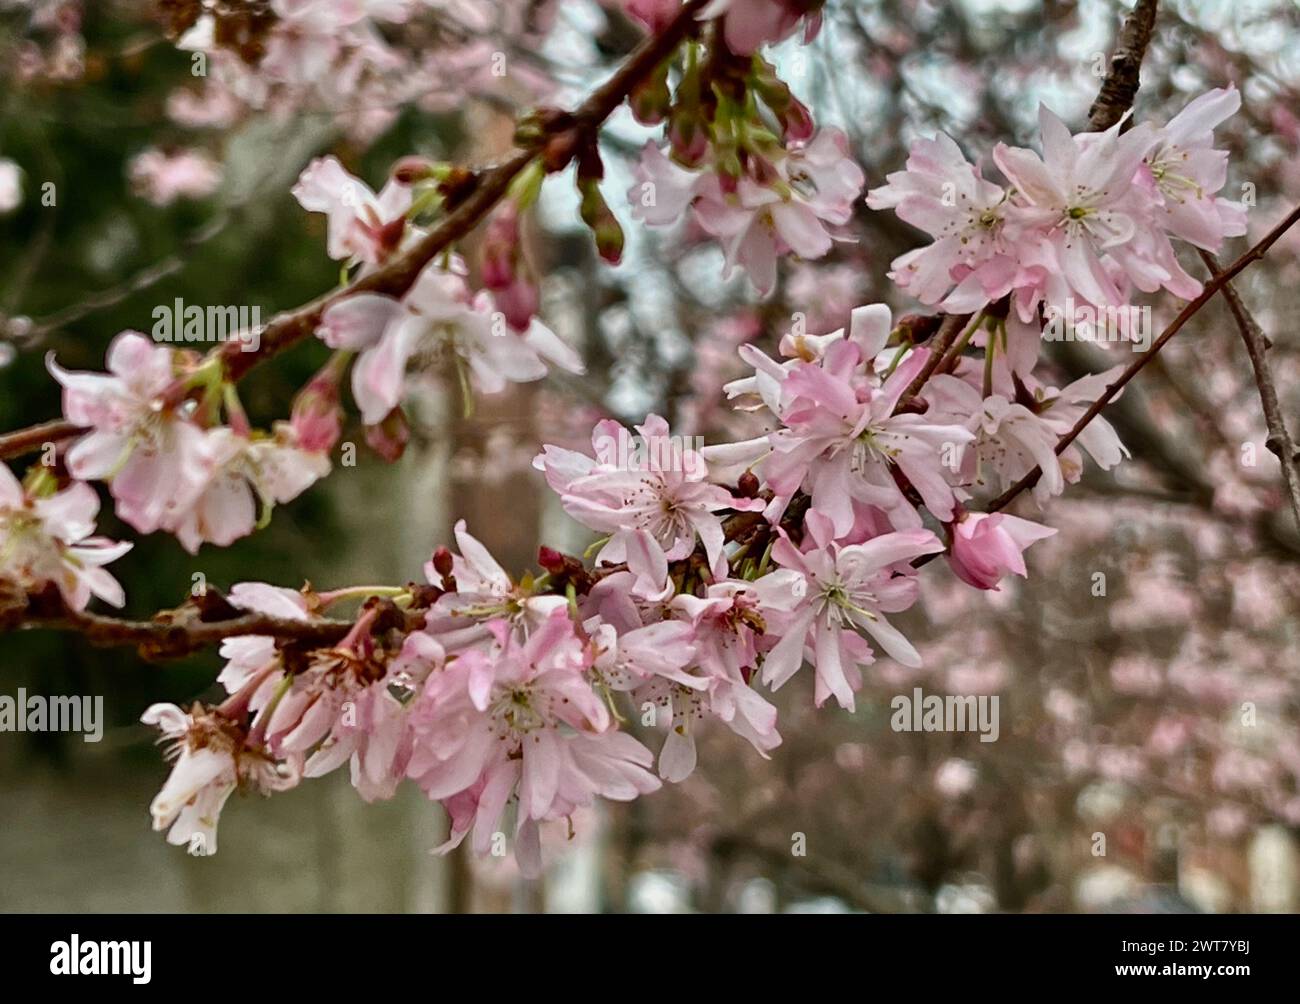 Winter cherries bloom in early spring in Philadelphia. Stock Photo